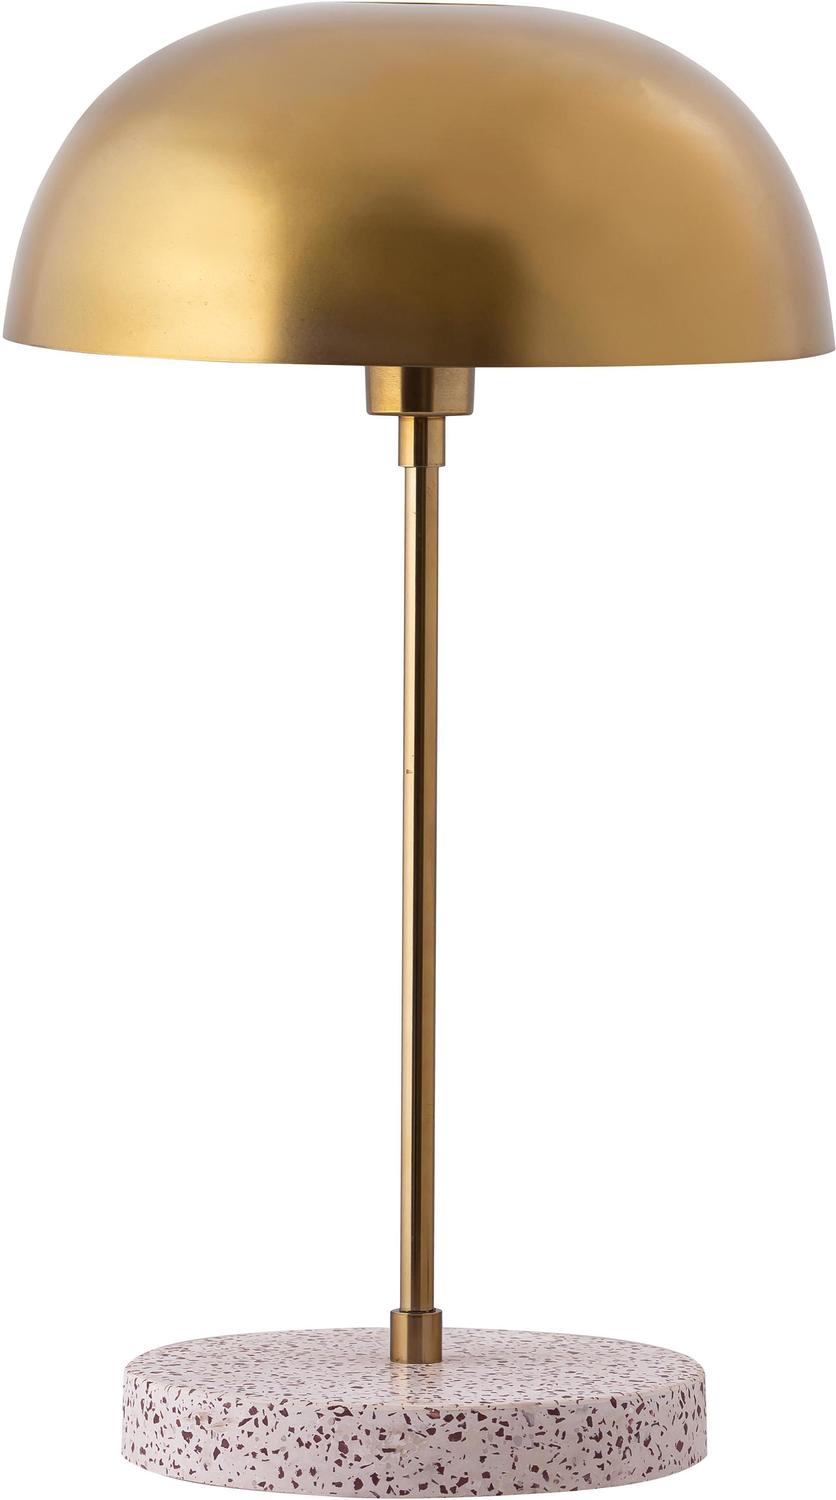 Contemporary Design Furniture Table Lamps Accent Tables Gold,Terrazzo